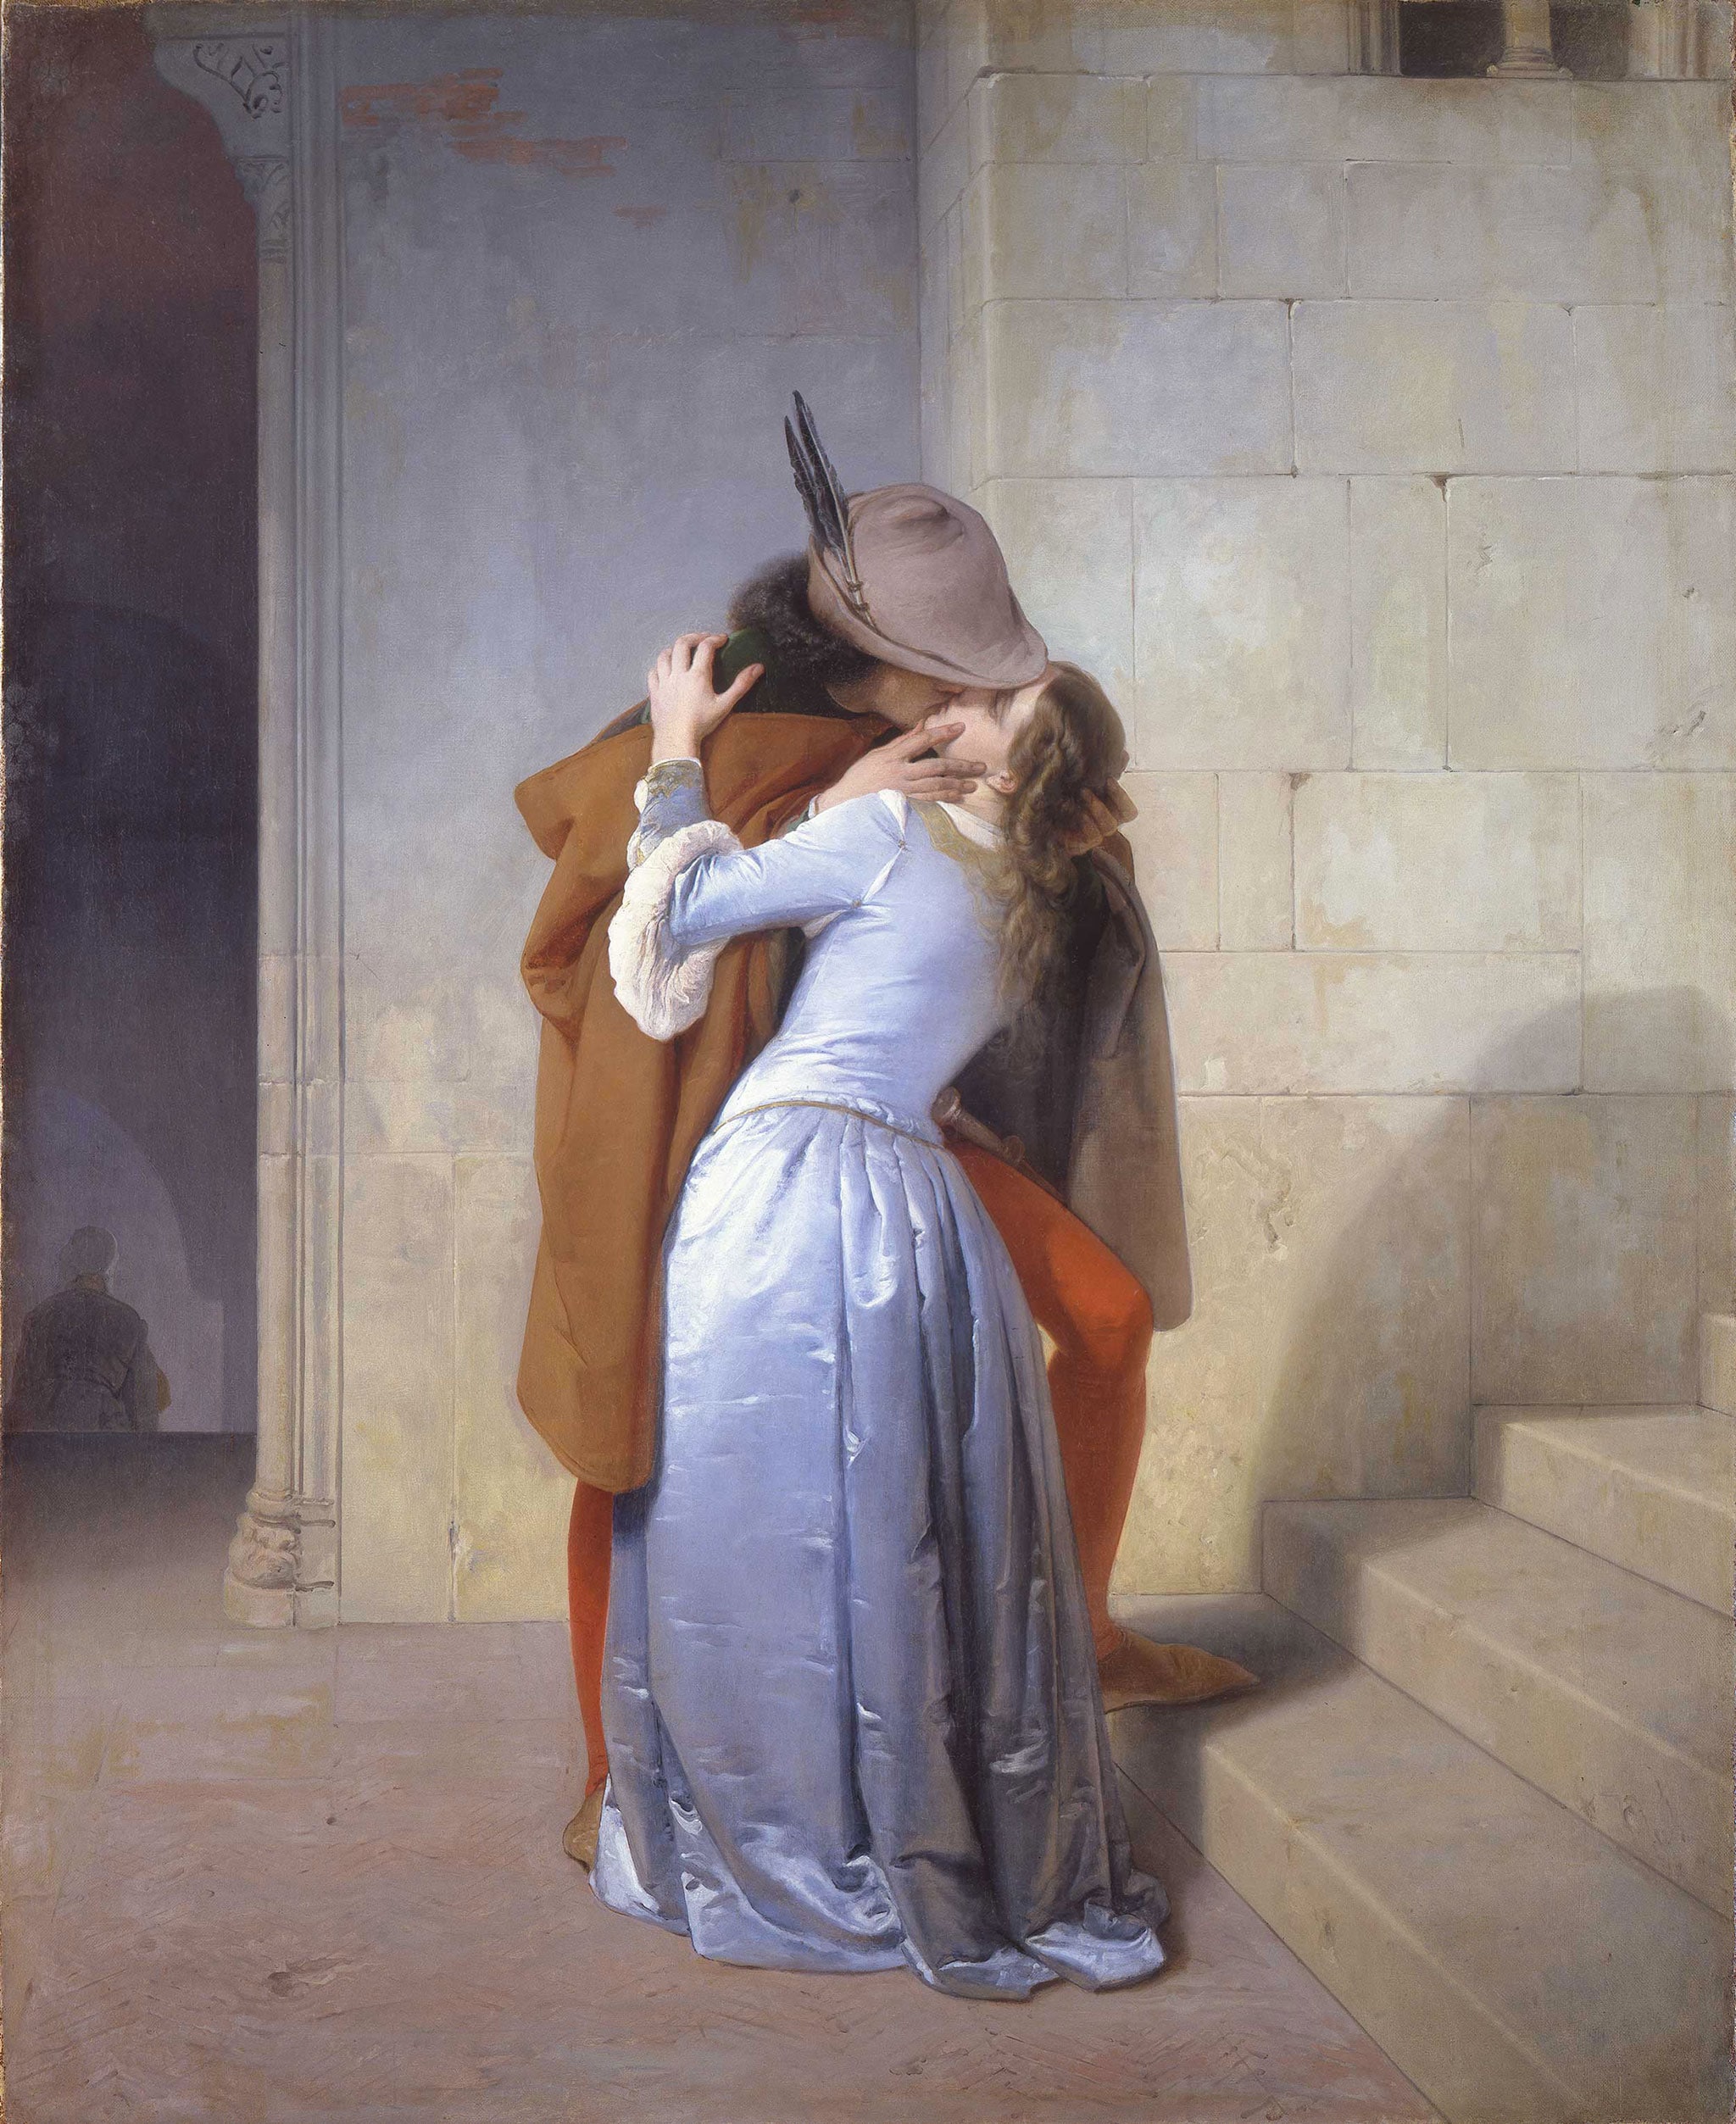 Francesco Hayez " Il bacio", 1859. Olio su tela, 112 x 88 cm. Pinacoteca di Brera, Milano.